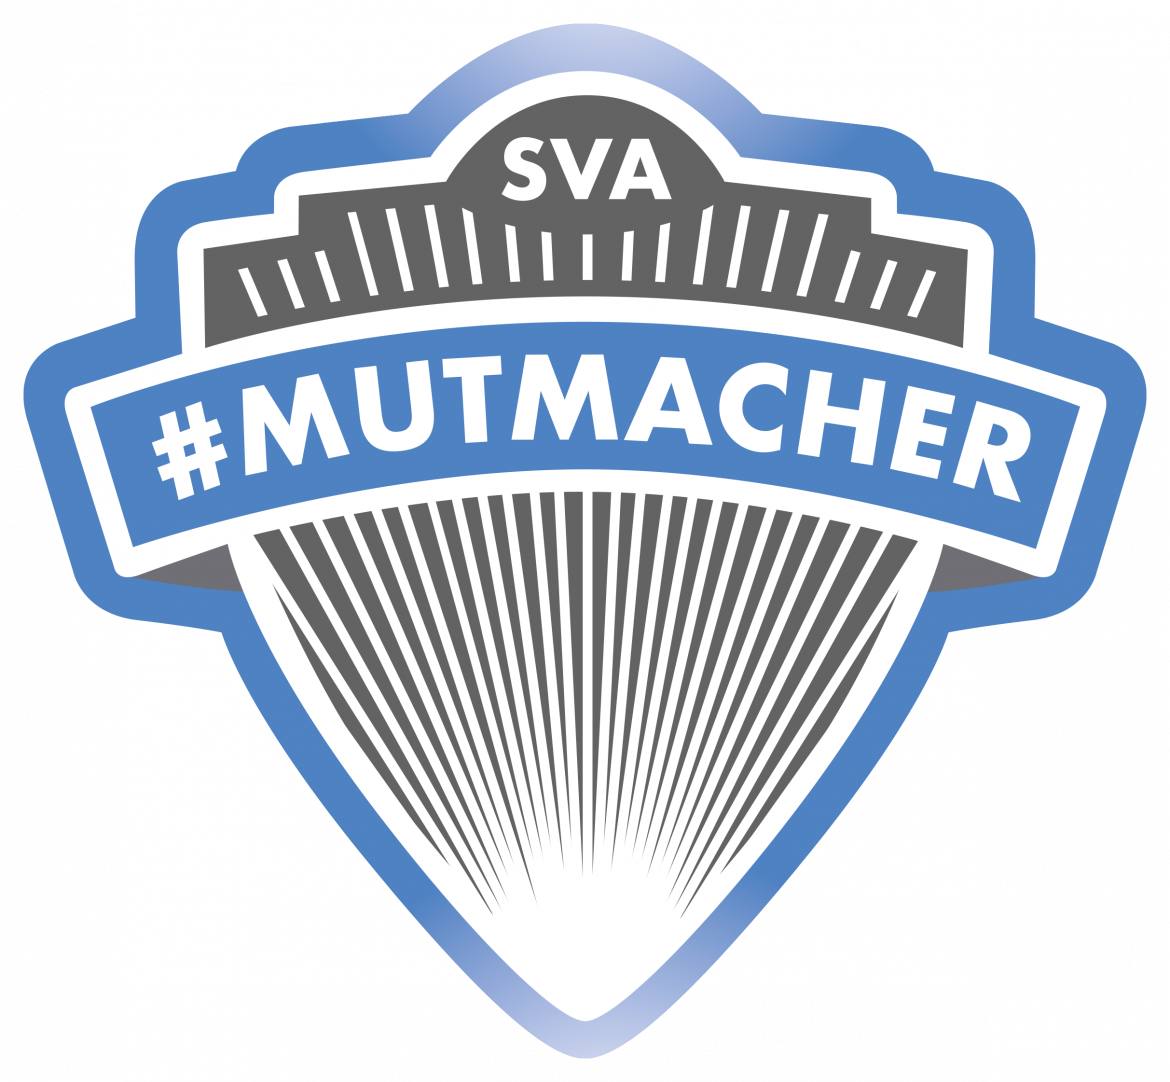 Mutmacher Awards Logo